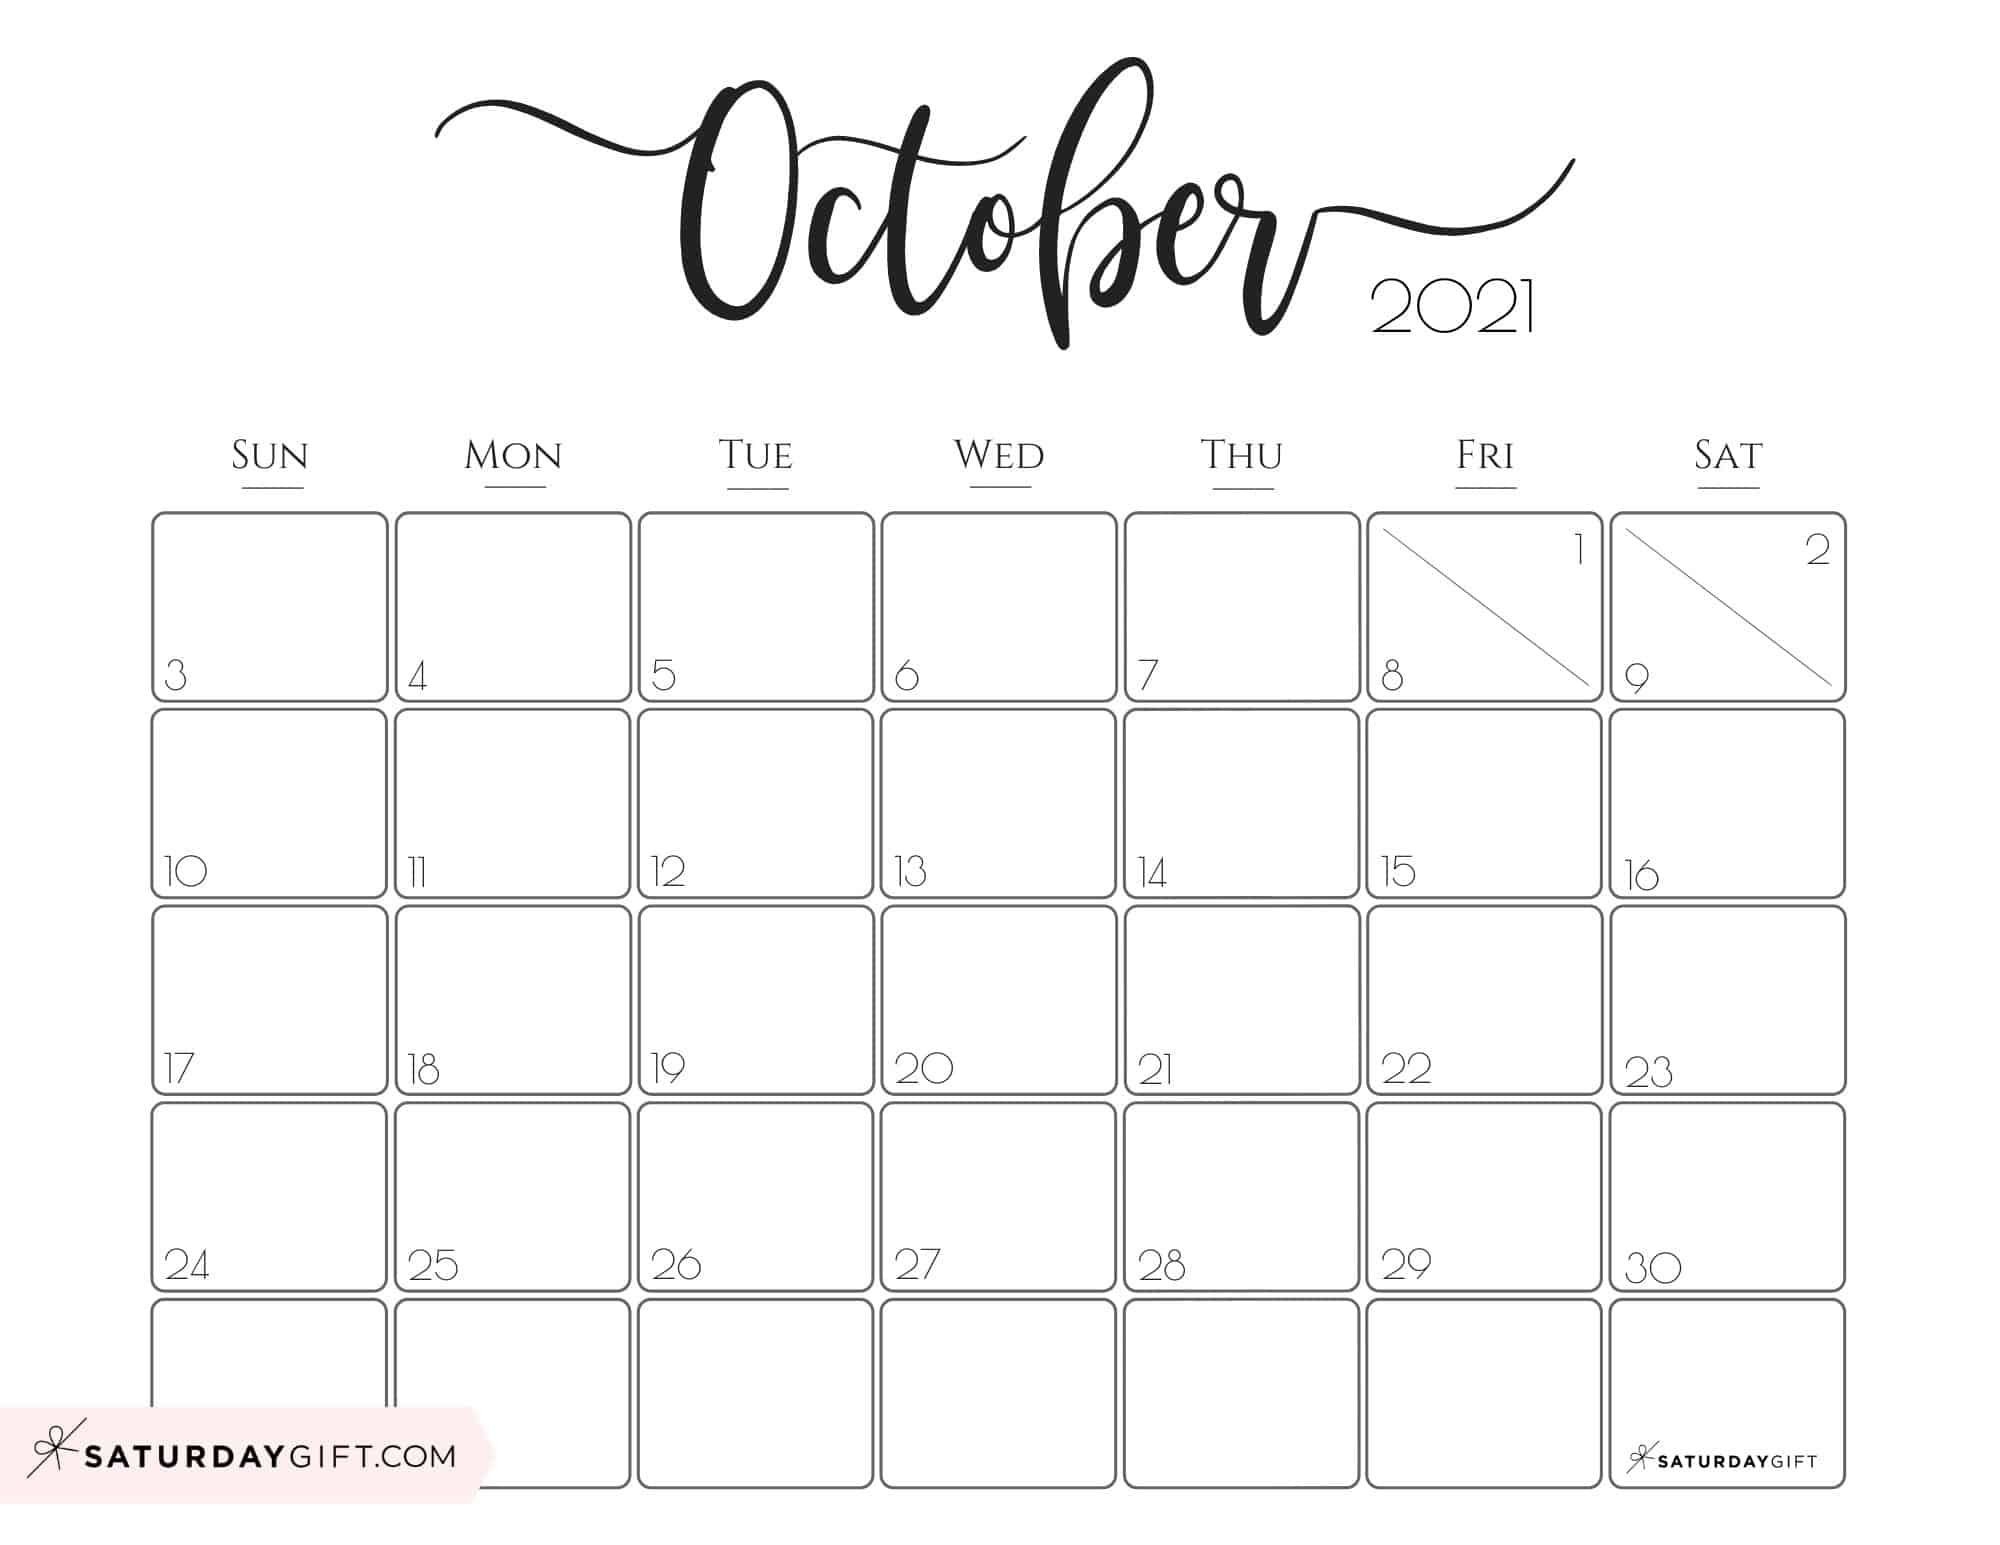 Elegant 2021 Calendar By Saturdaygift - Pretty Printable-October 2021 Calendar